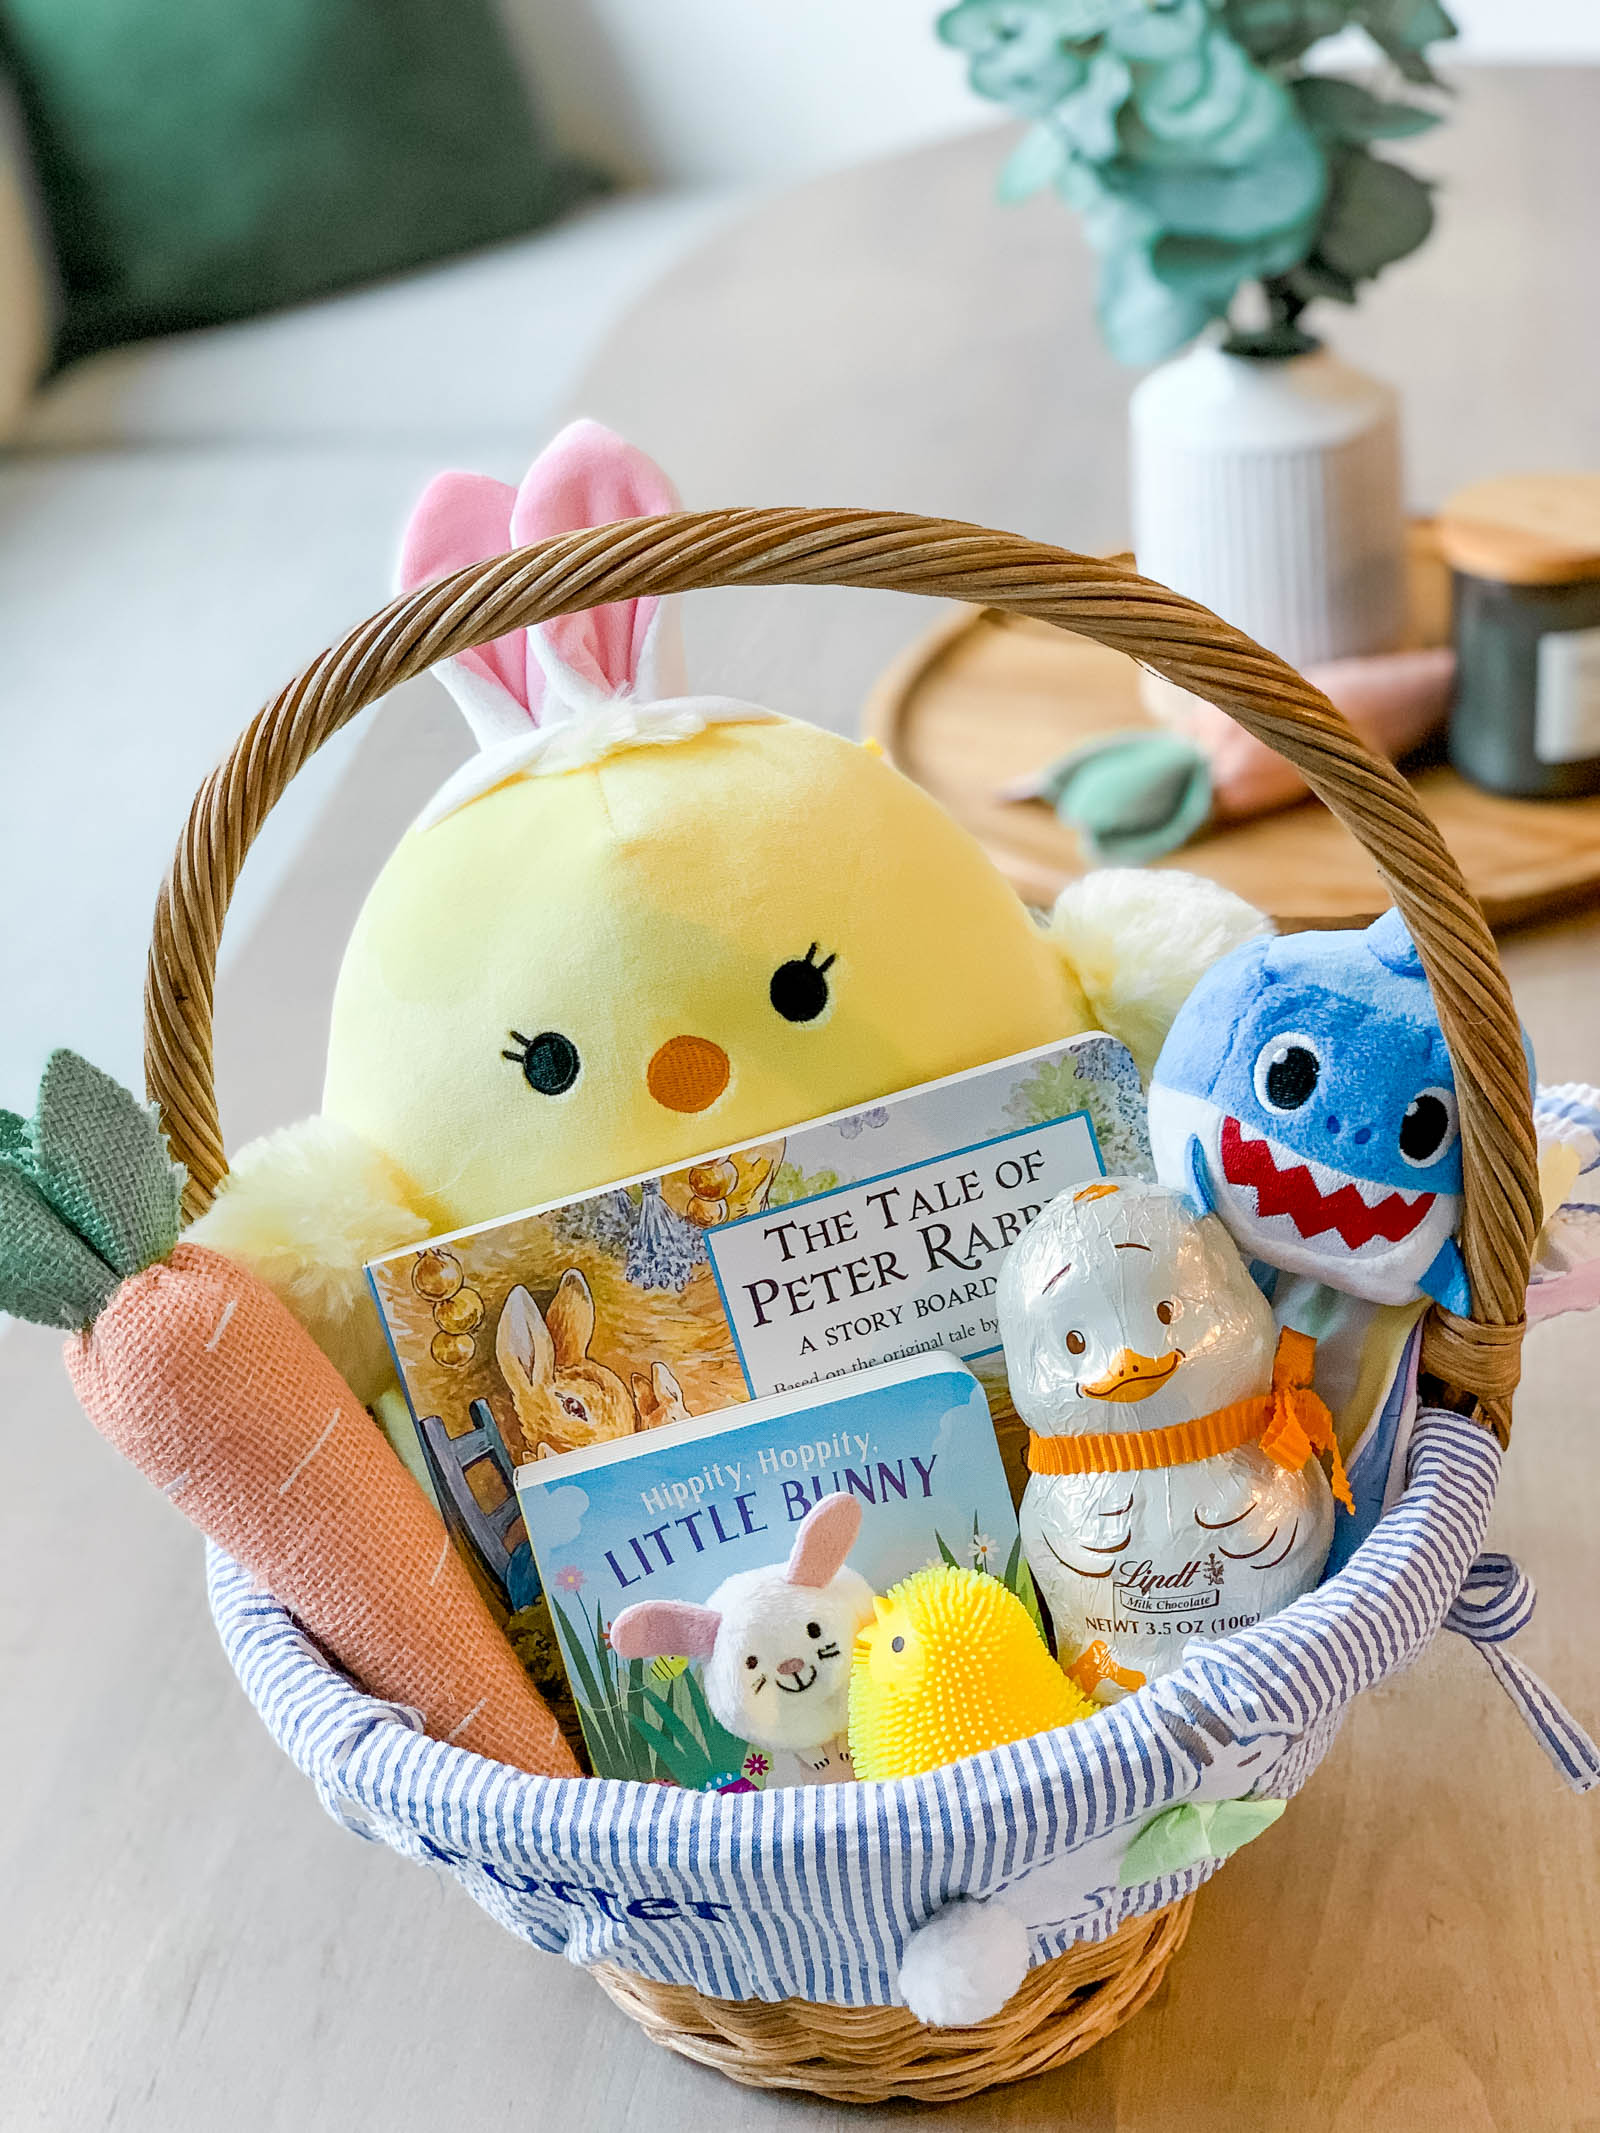 Easter basket ideas for babies